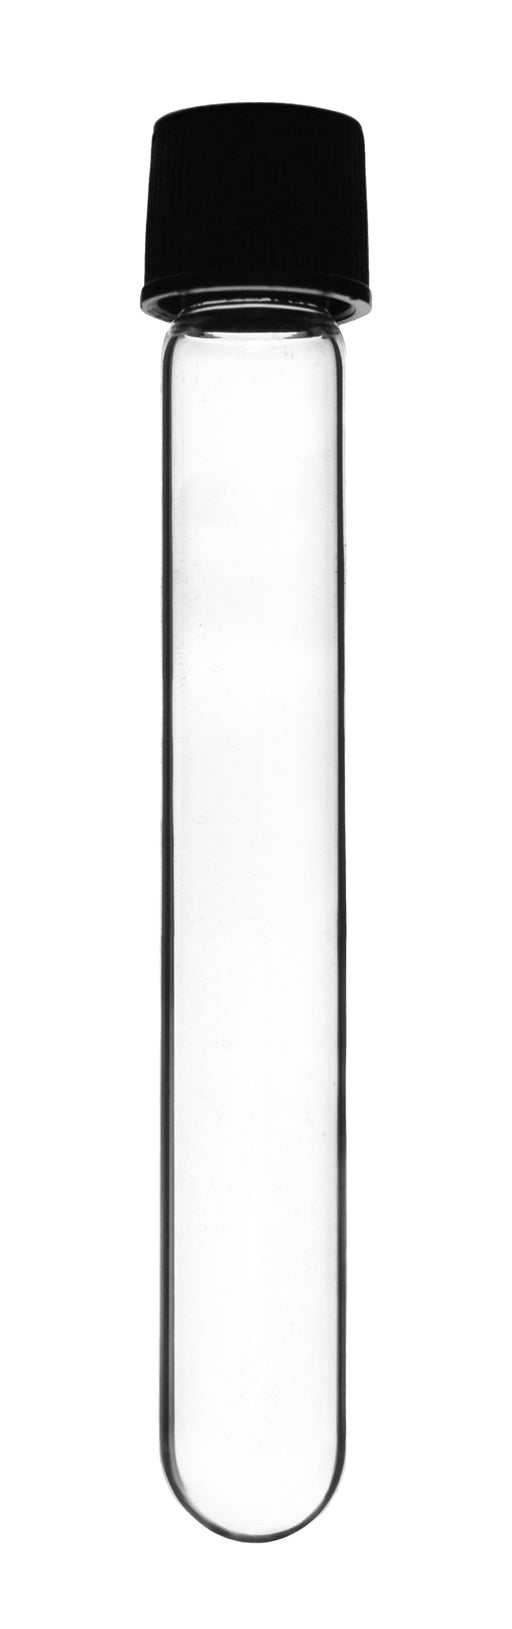 Culture Tube with Screw Cap, 10mL - 16x100mm - Marking Spot - Round Bottom - Borosilicate Glass